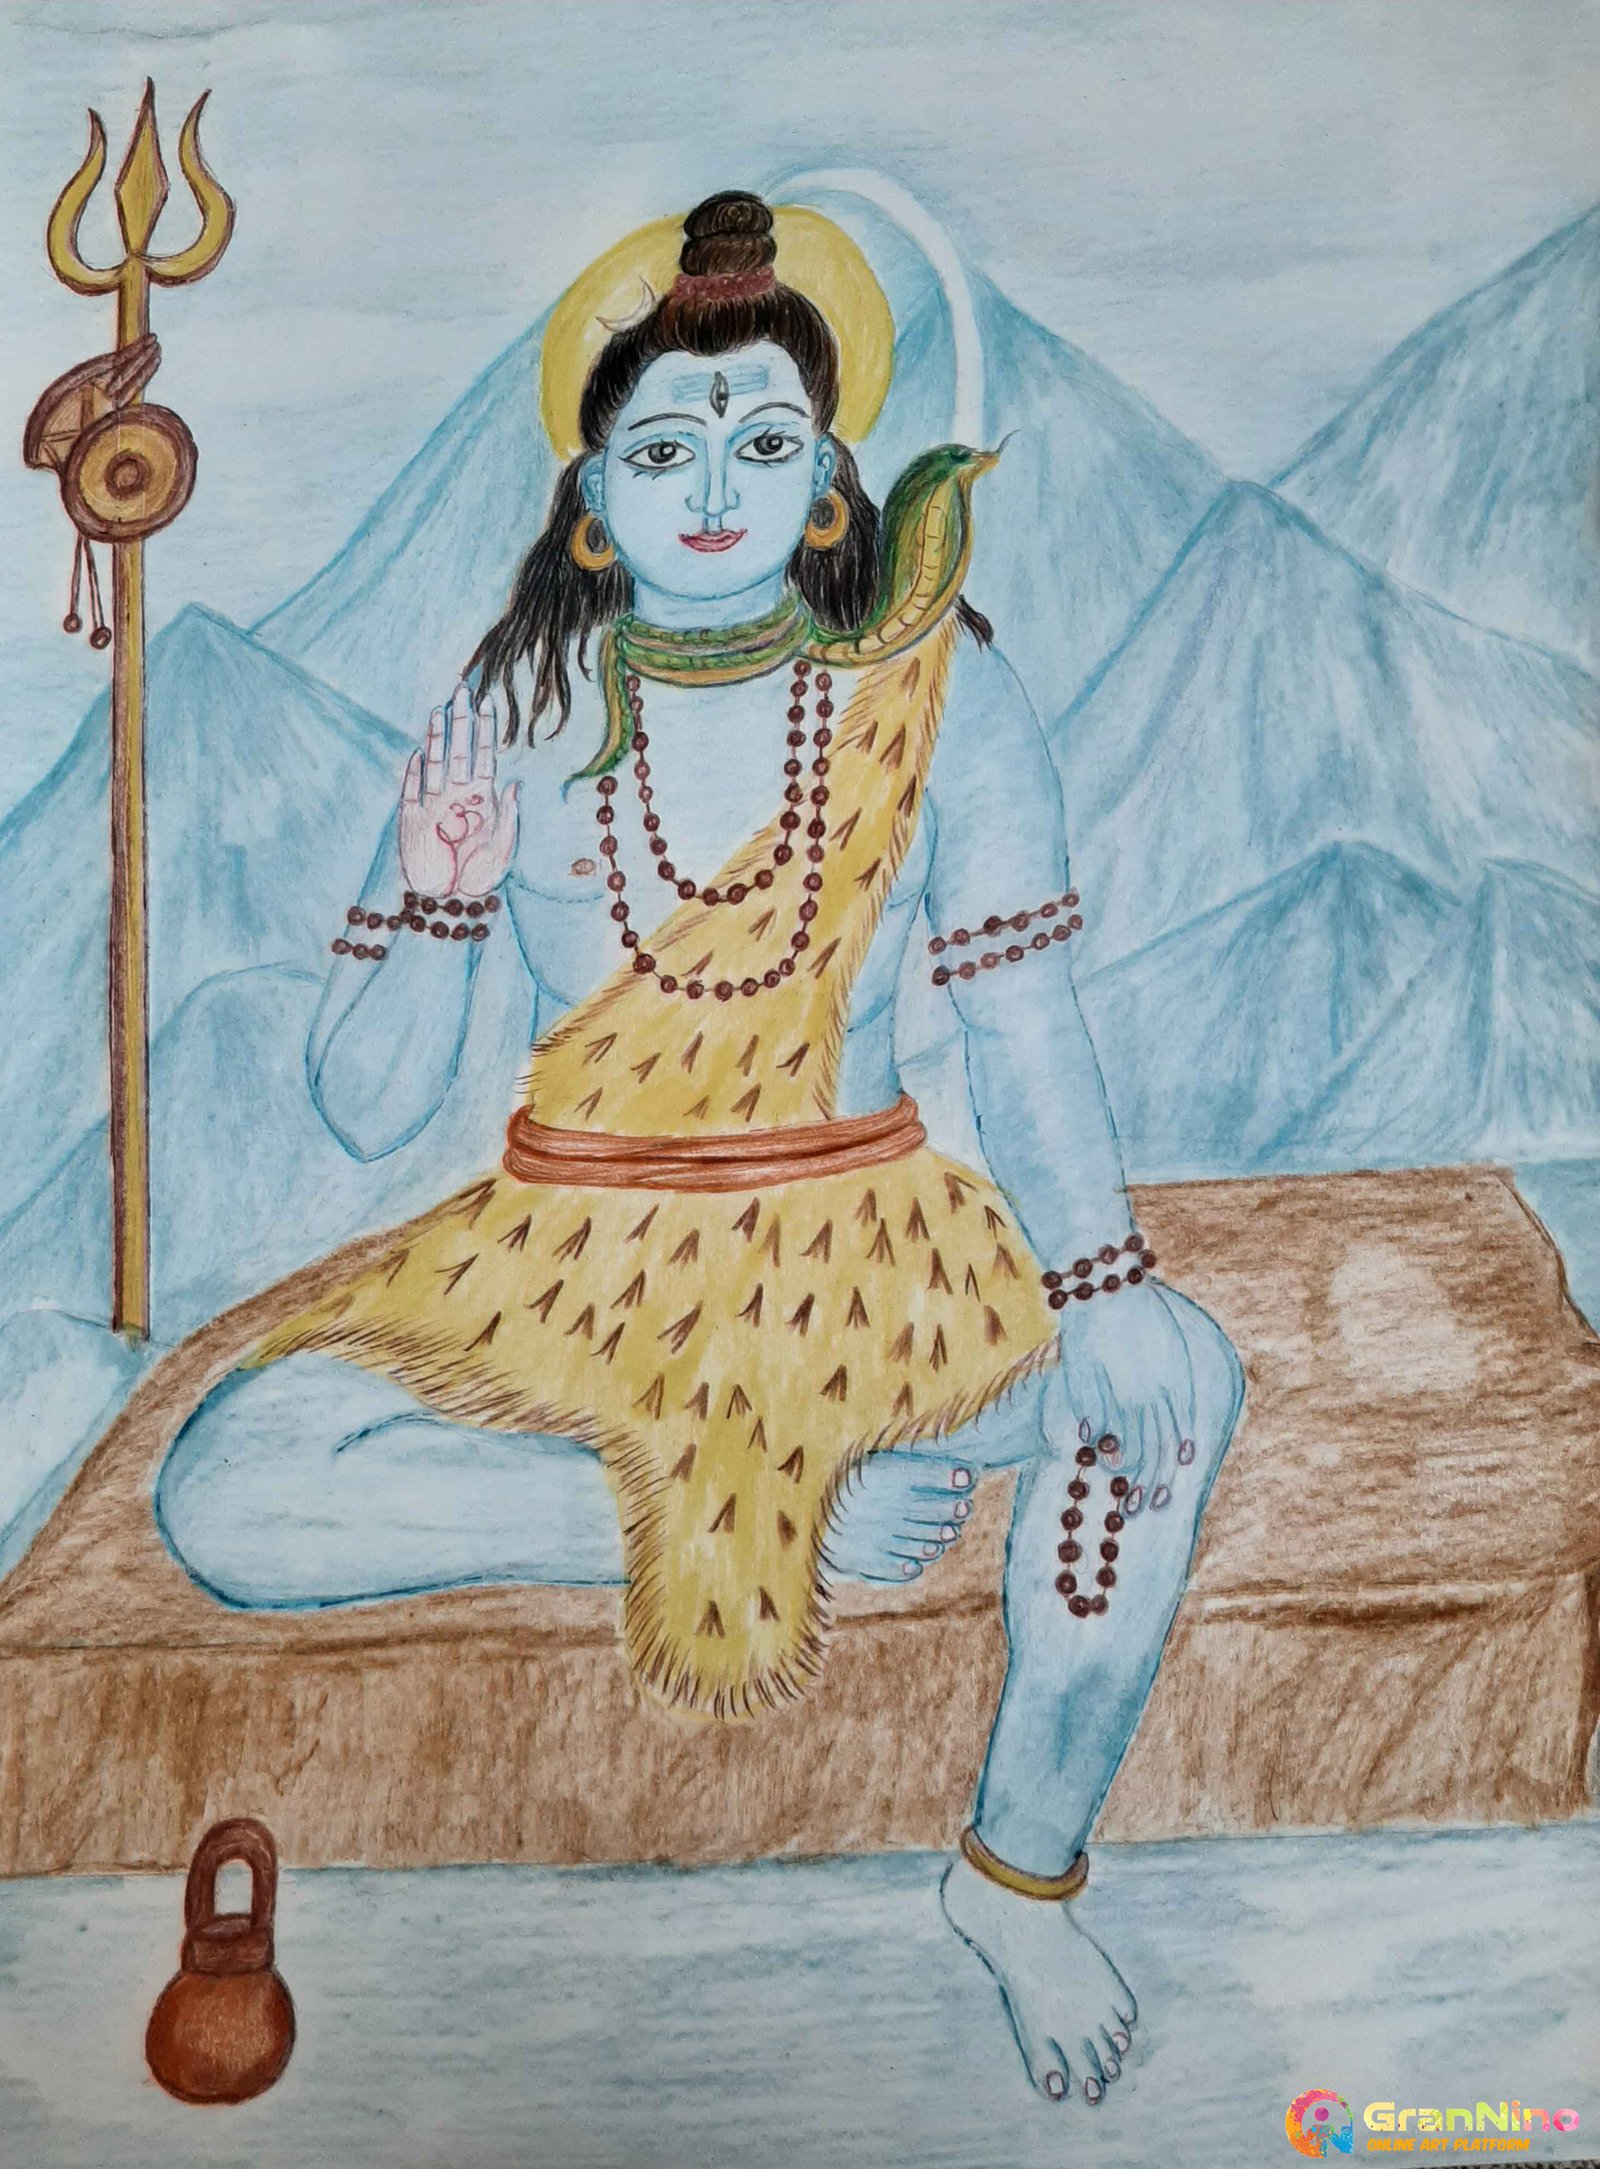 Lord Shiva by In-Sine on DeviantArt